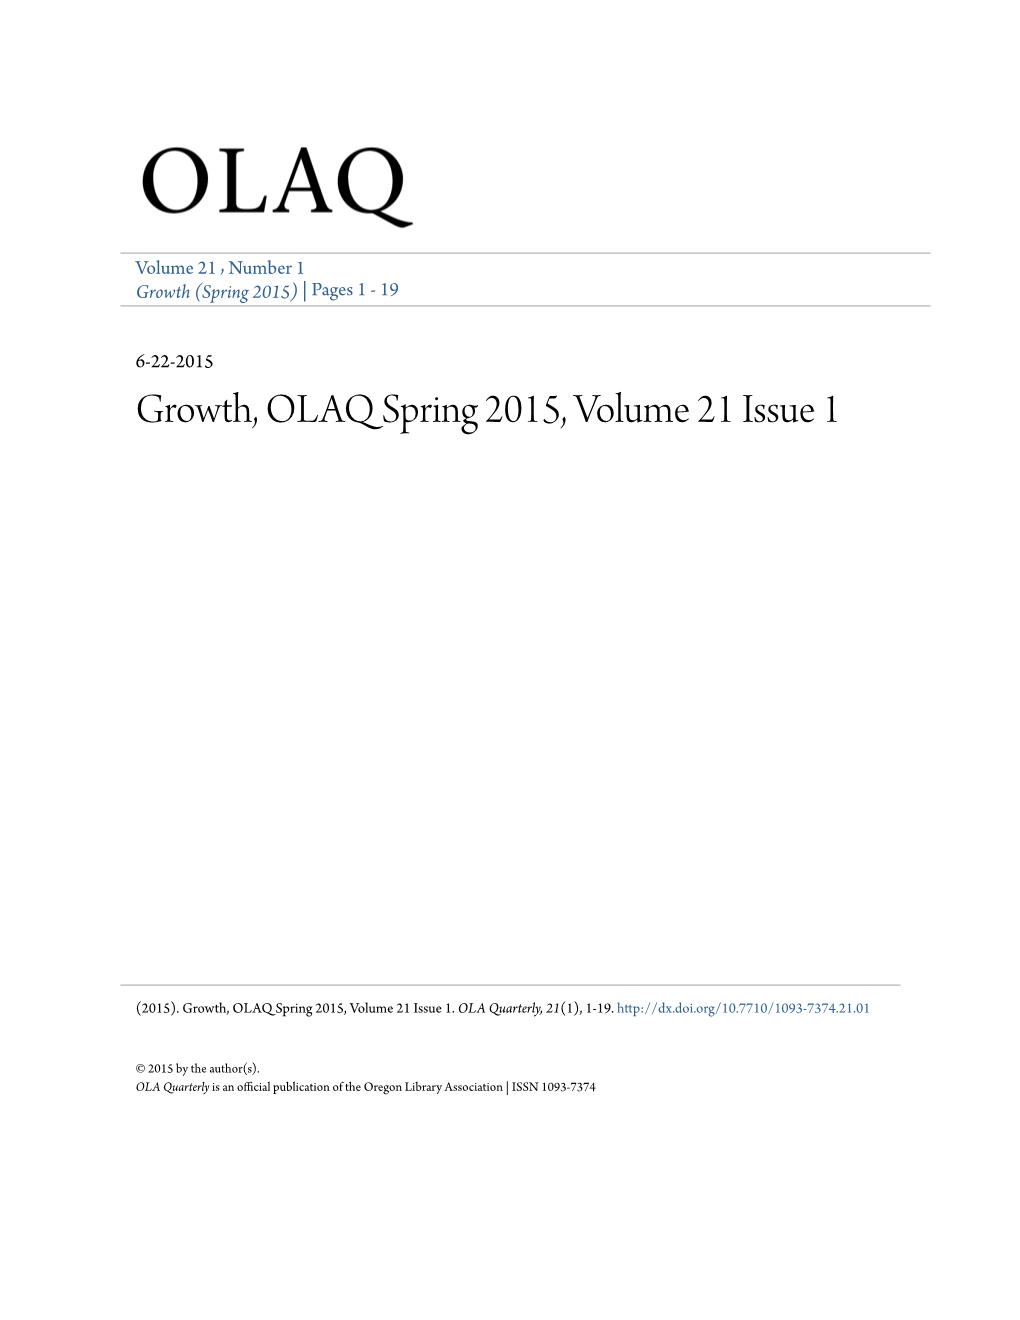 Growth, OLAQ Spring 2015, Volume 21 Issue 1